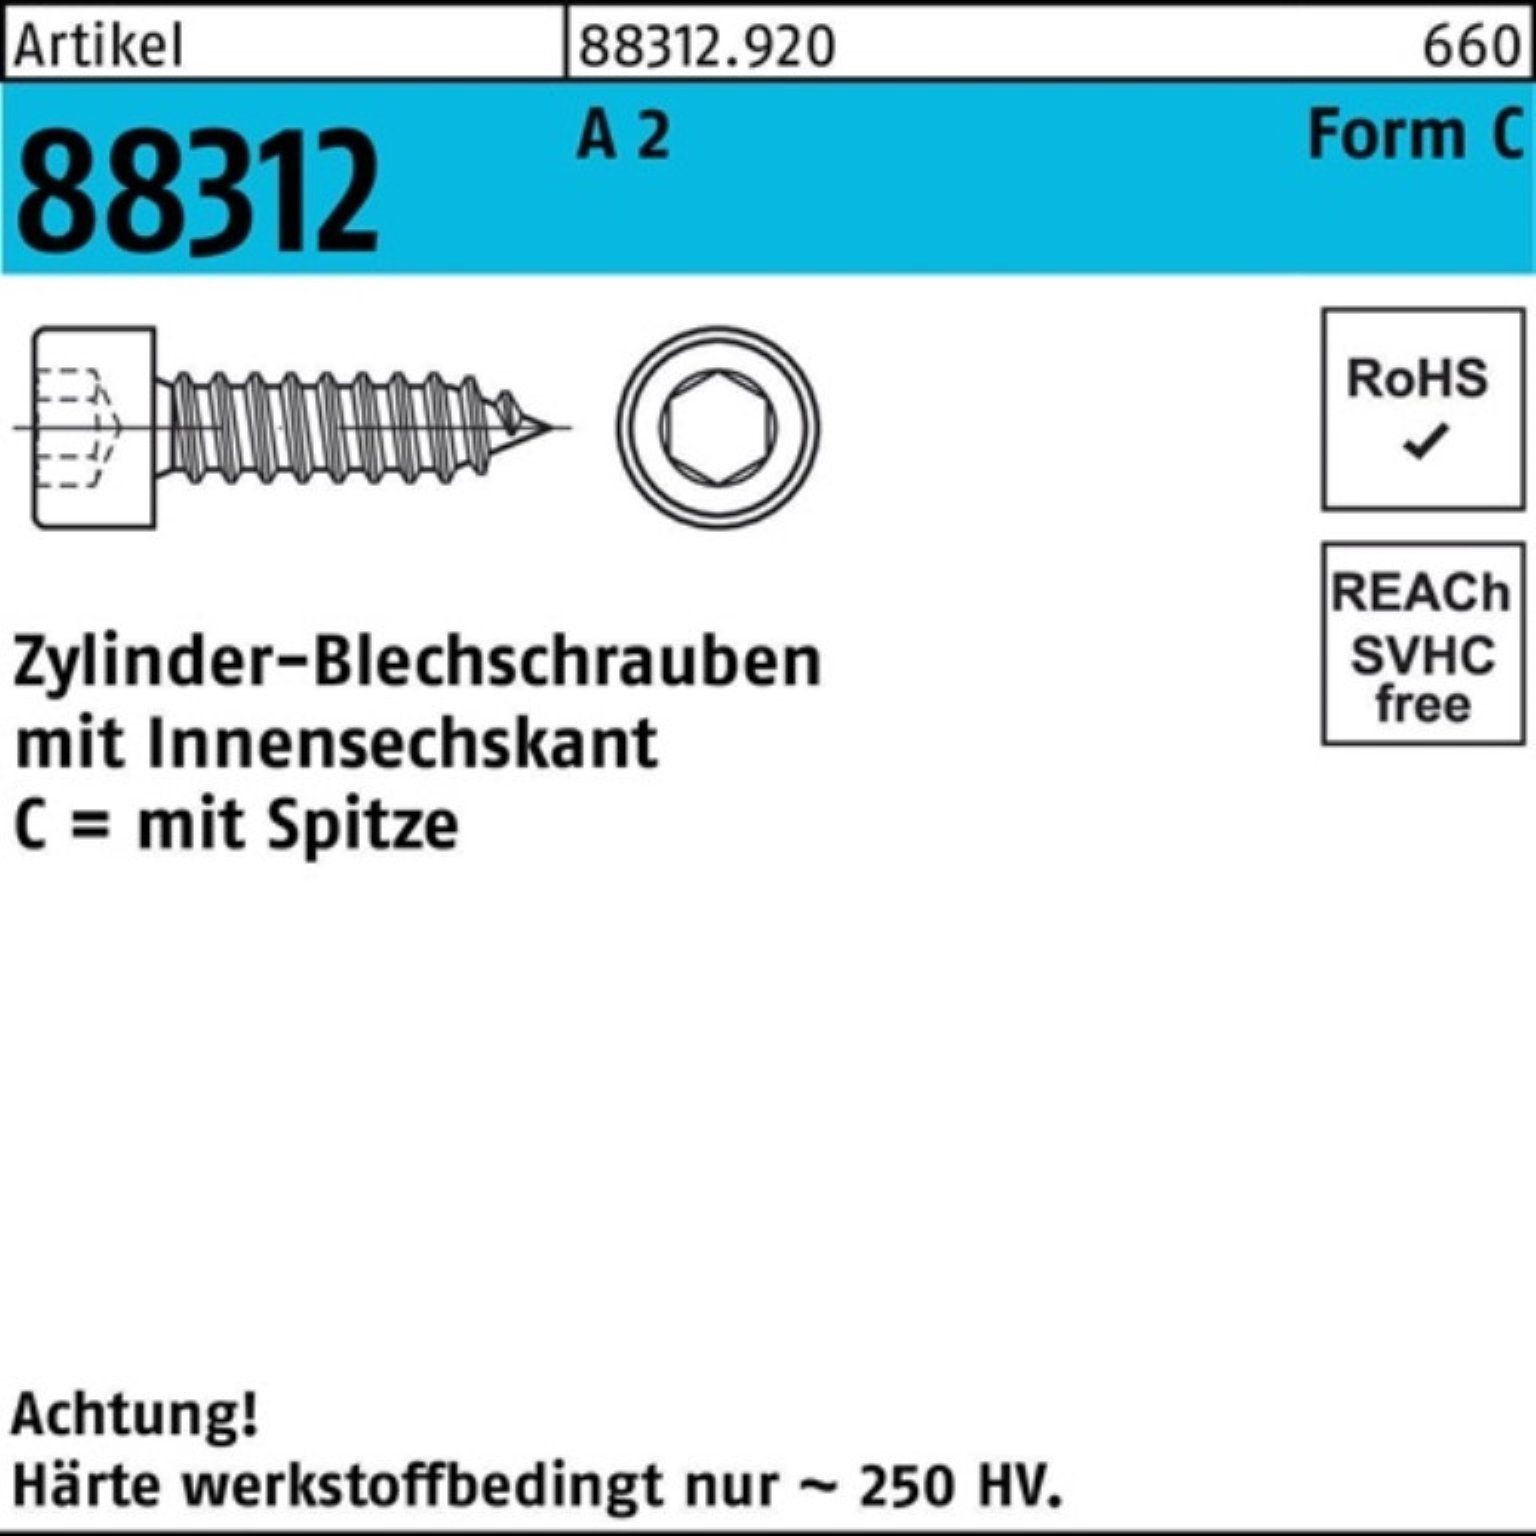 Reyher Blechschraube 200er Pack Zylinderblechschraube A Spitze/Innen-6kt 19 C R 88312 6,3x